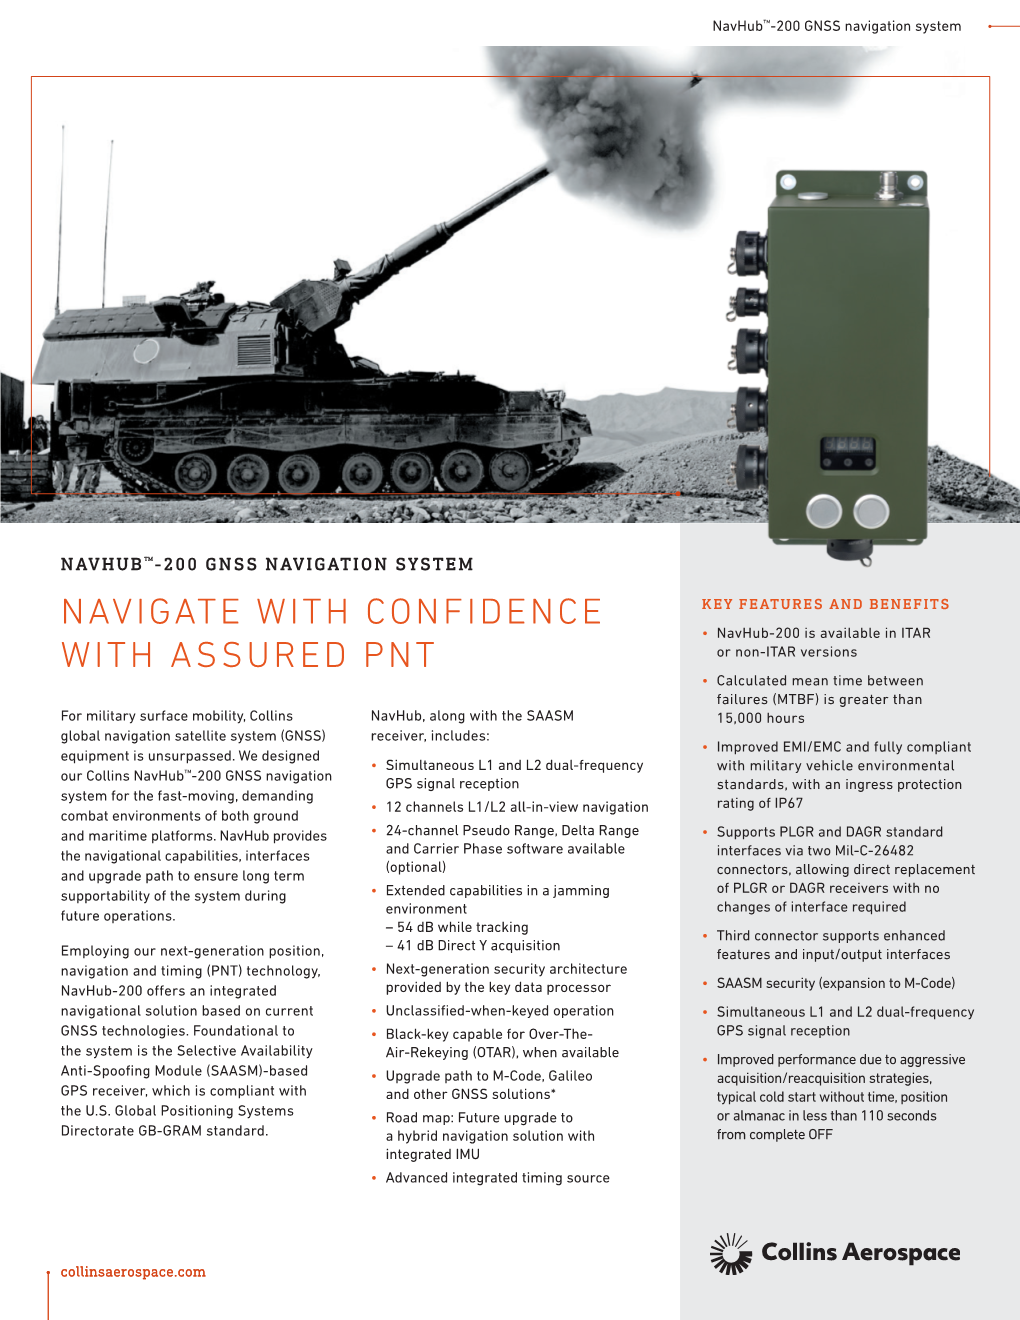 Navhub™-200 GNSS Navigation System